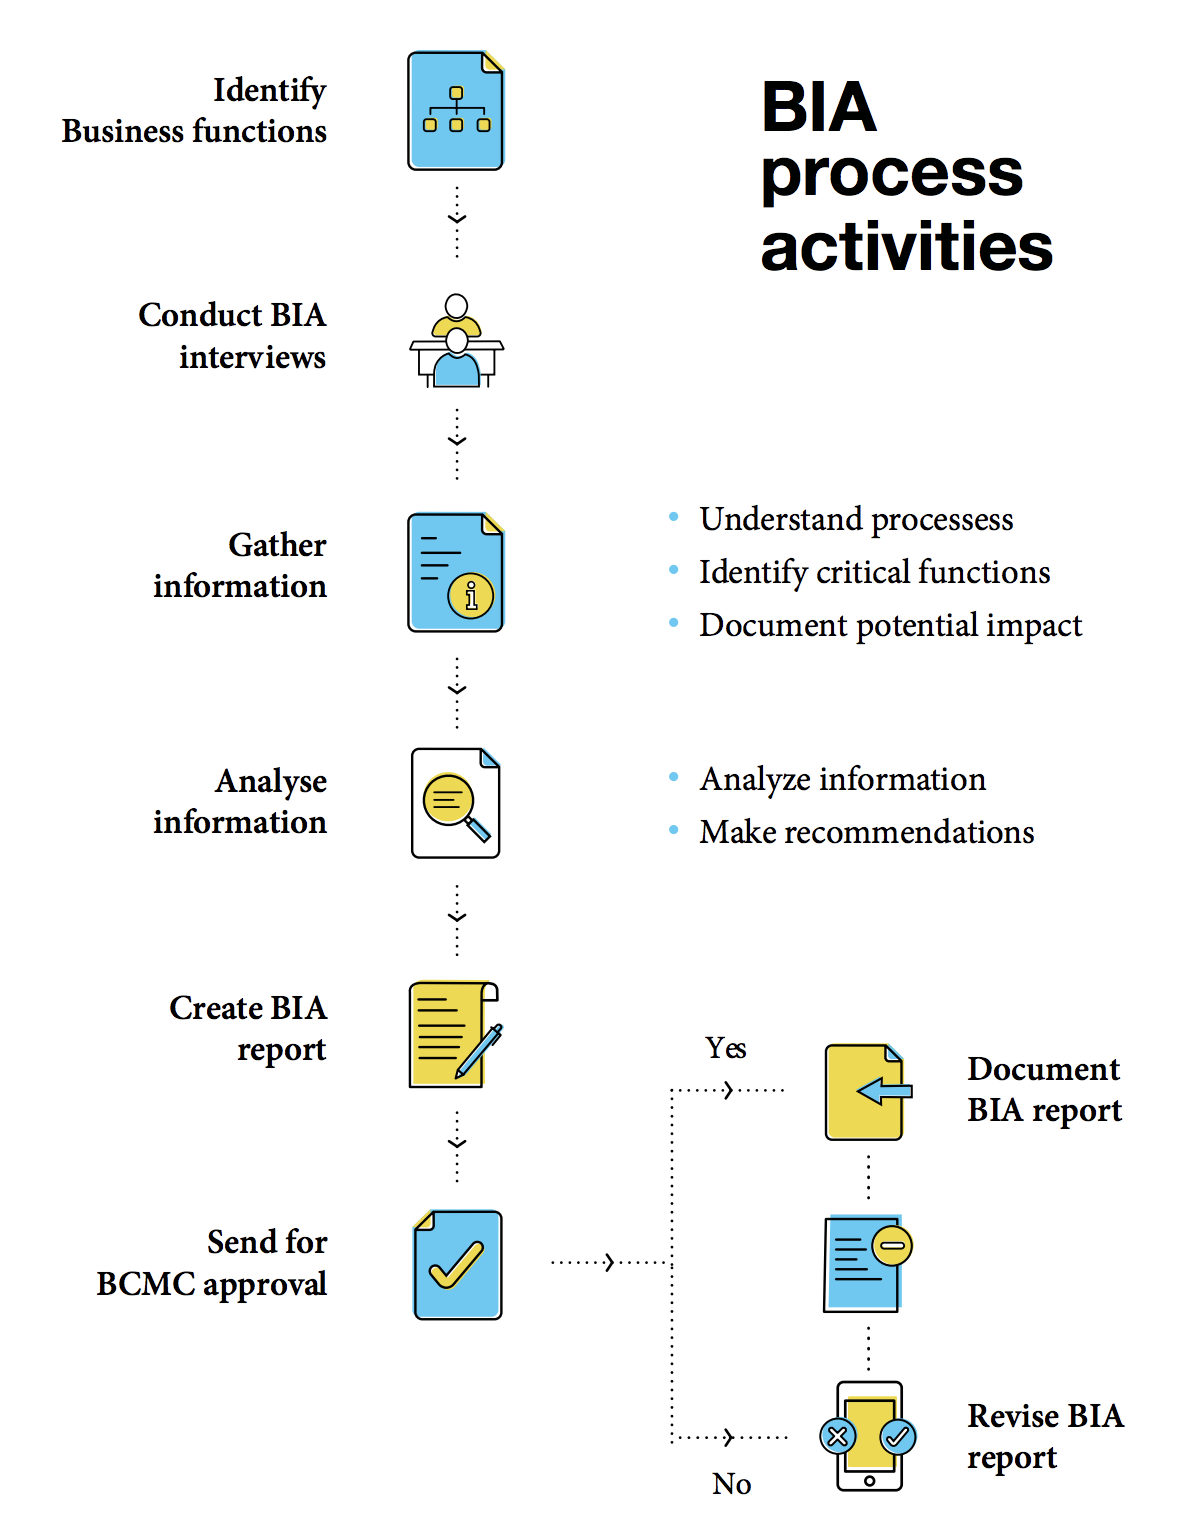 BIA process activities